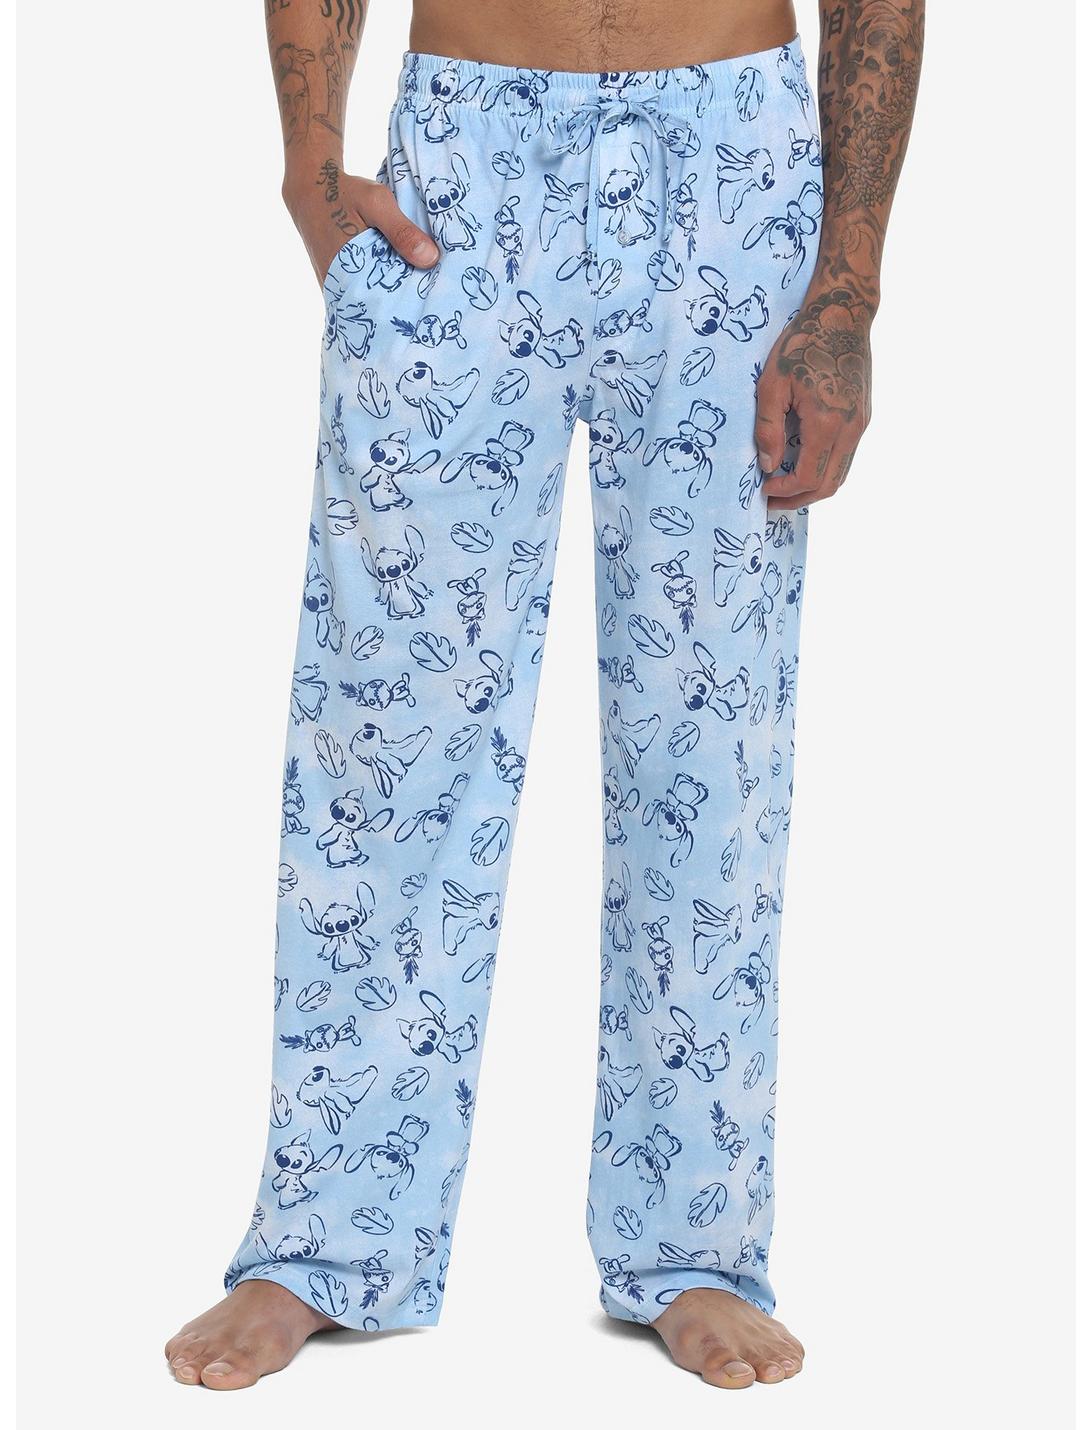 Disney Lilo & Stitch Sketch Pajama Pants, BLUE, hi-res